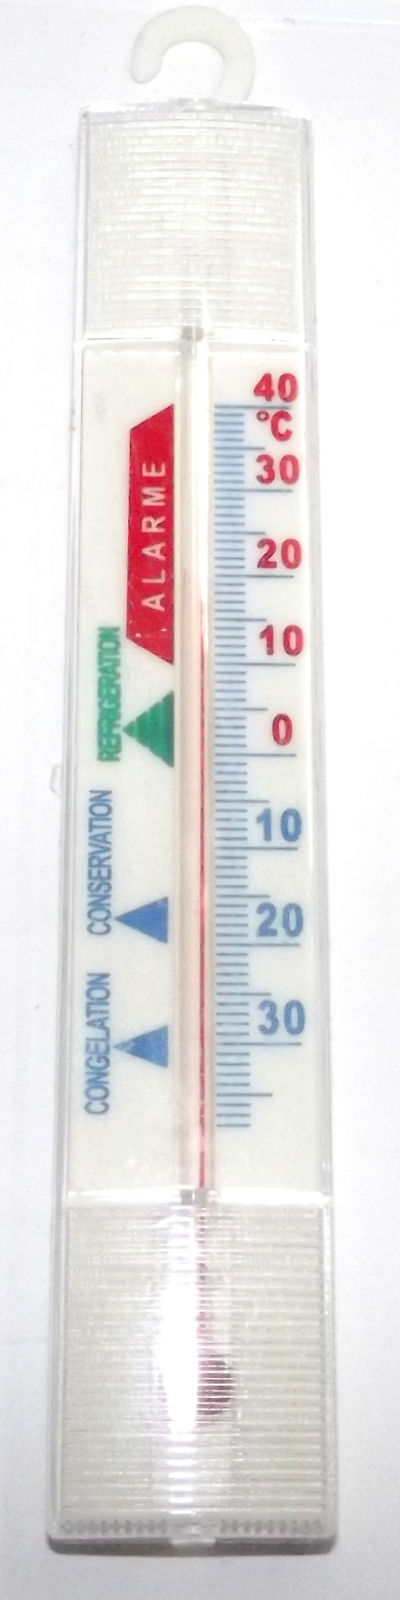 lot de 3 Thermomètre de Frigo Congelateur, Thermomètre de